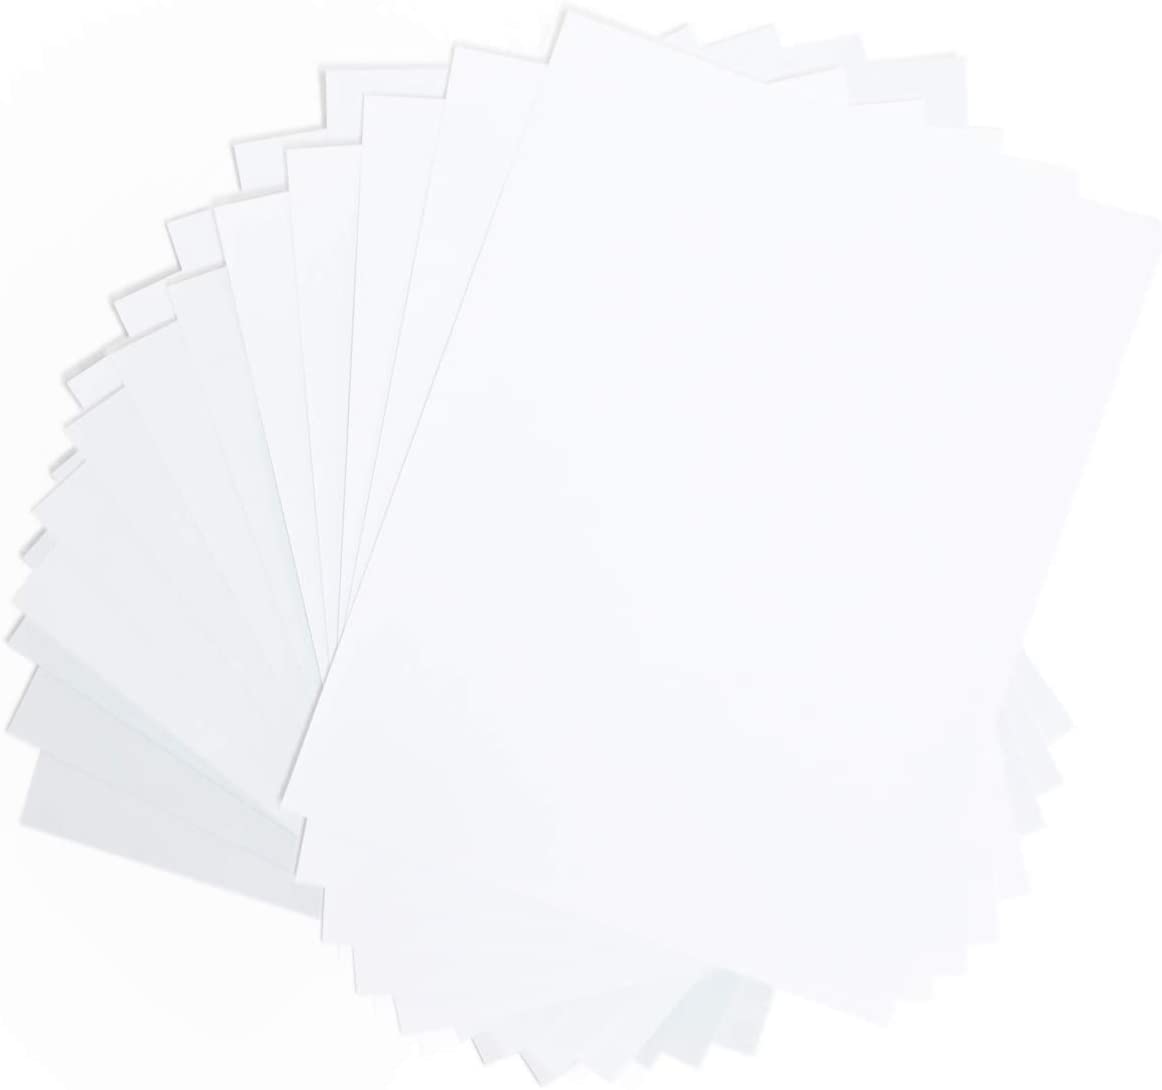 SubliMask Heat Transfer Vinyl Masking Sheets, 8x10, 50 sheets